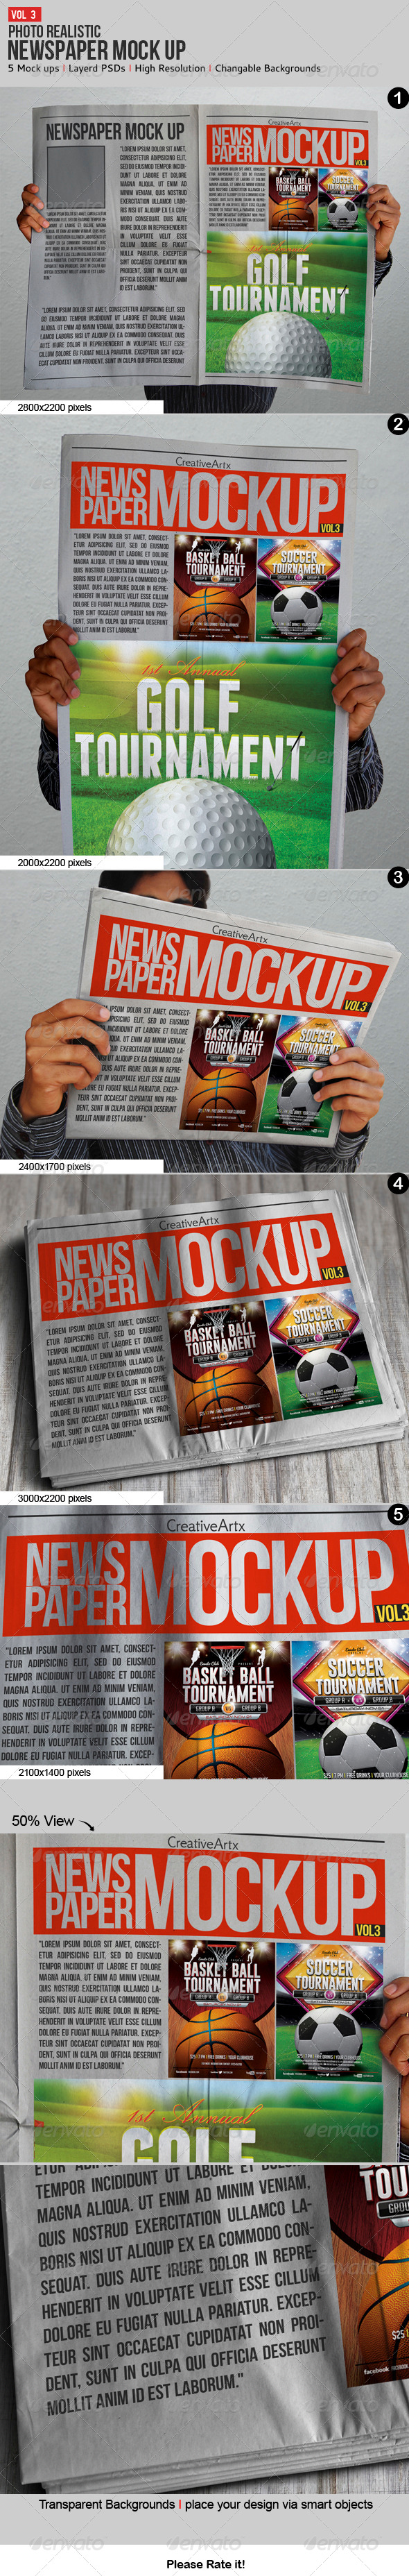 Download Newspaper / Newsletter Mock-Up - V.3 by creativeartx | GraphicRiver